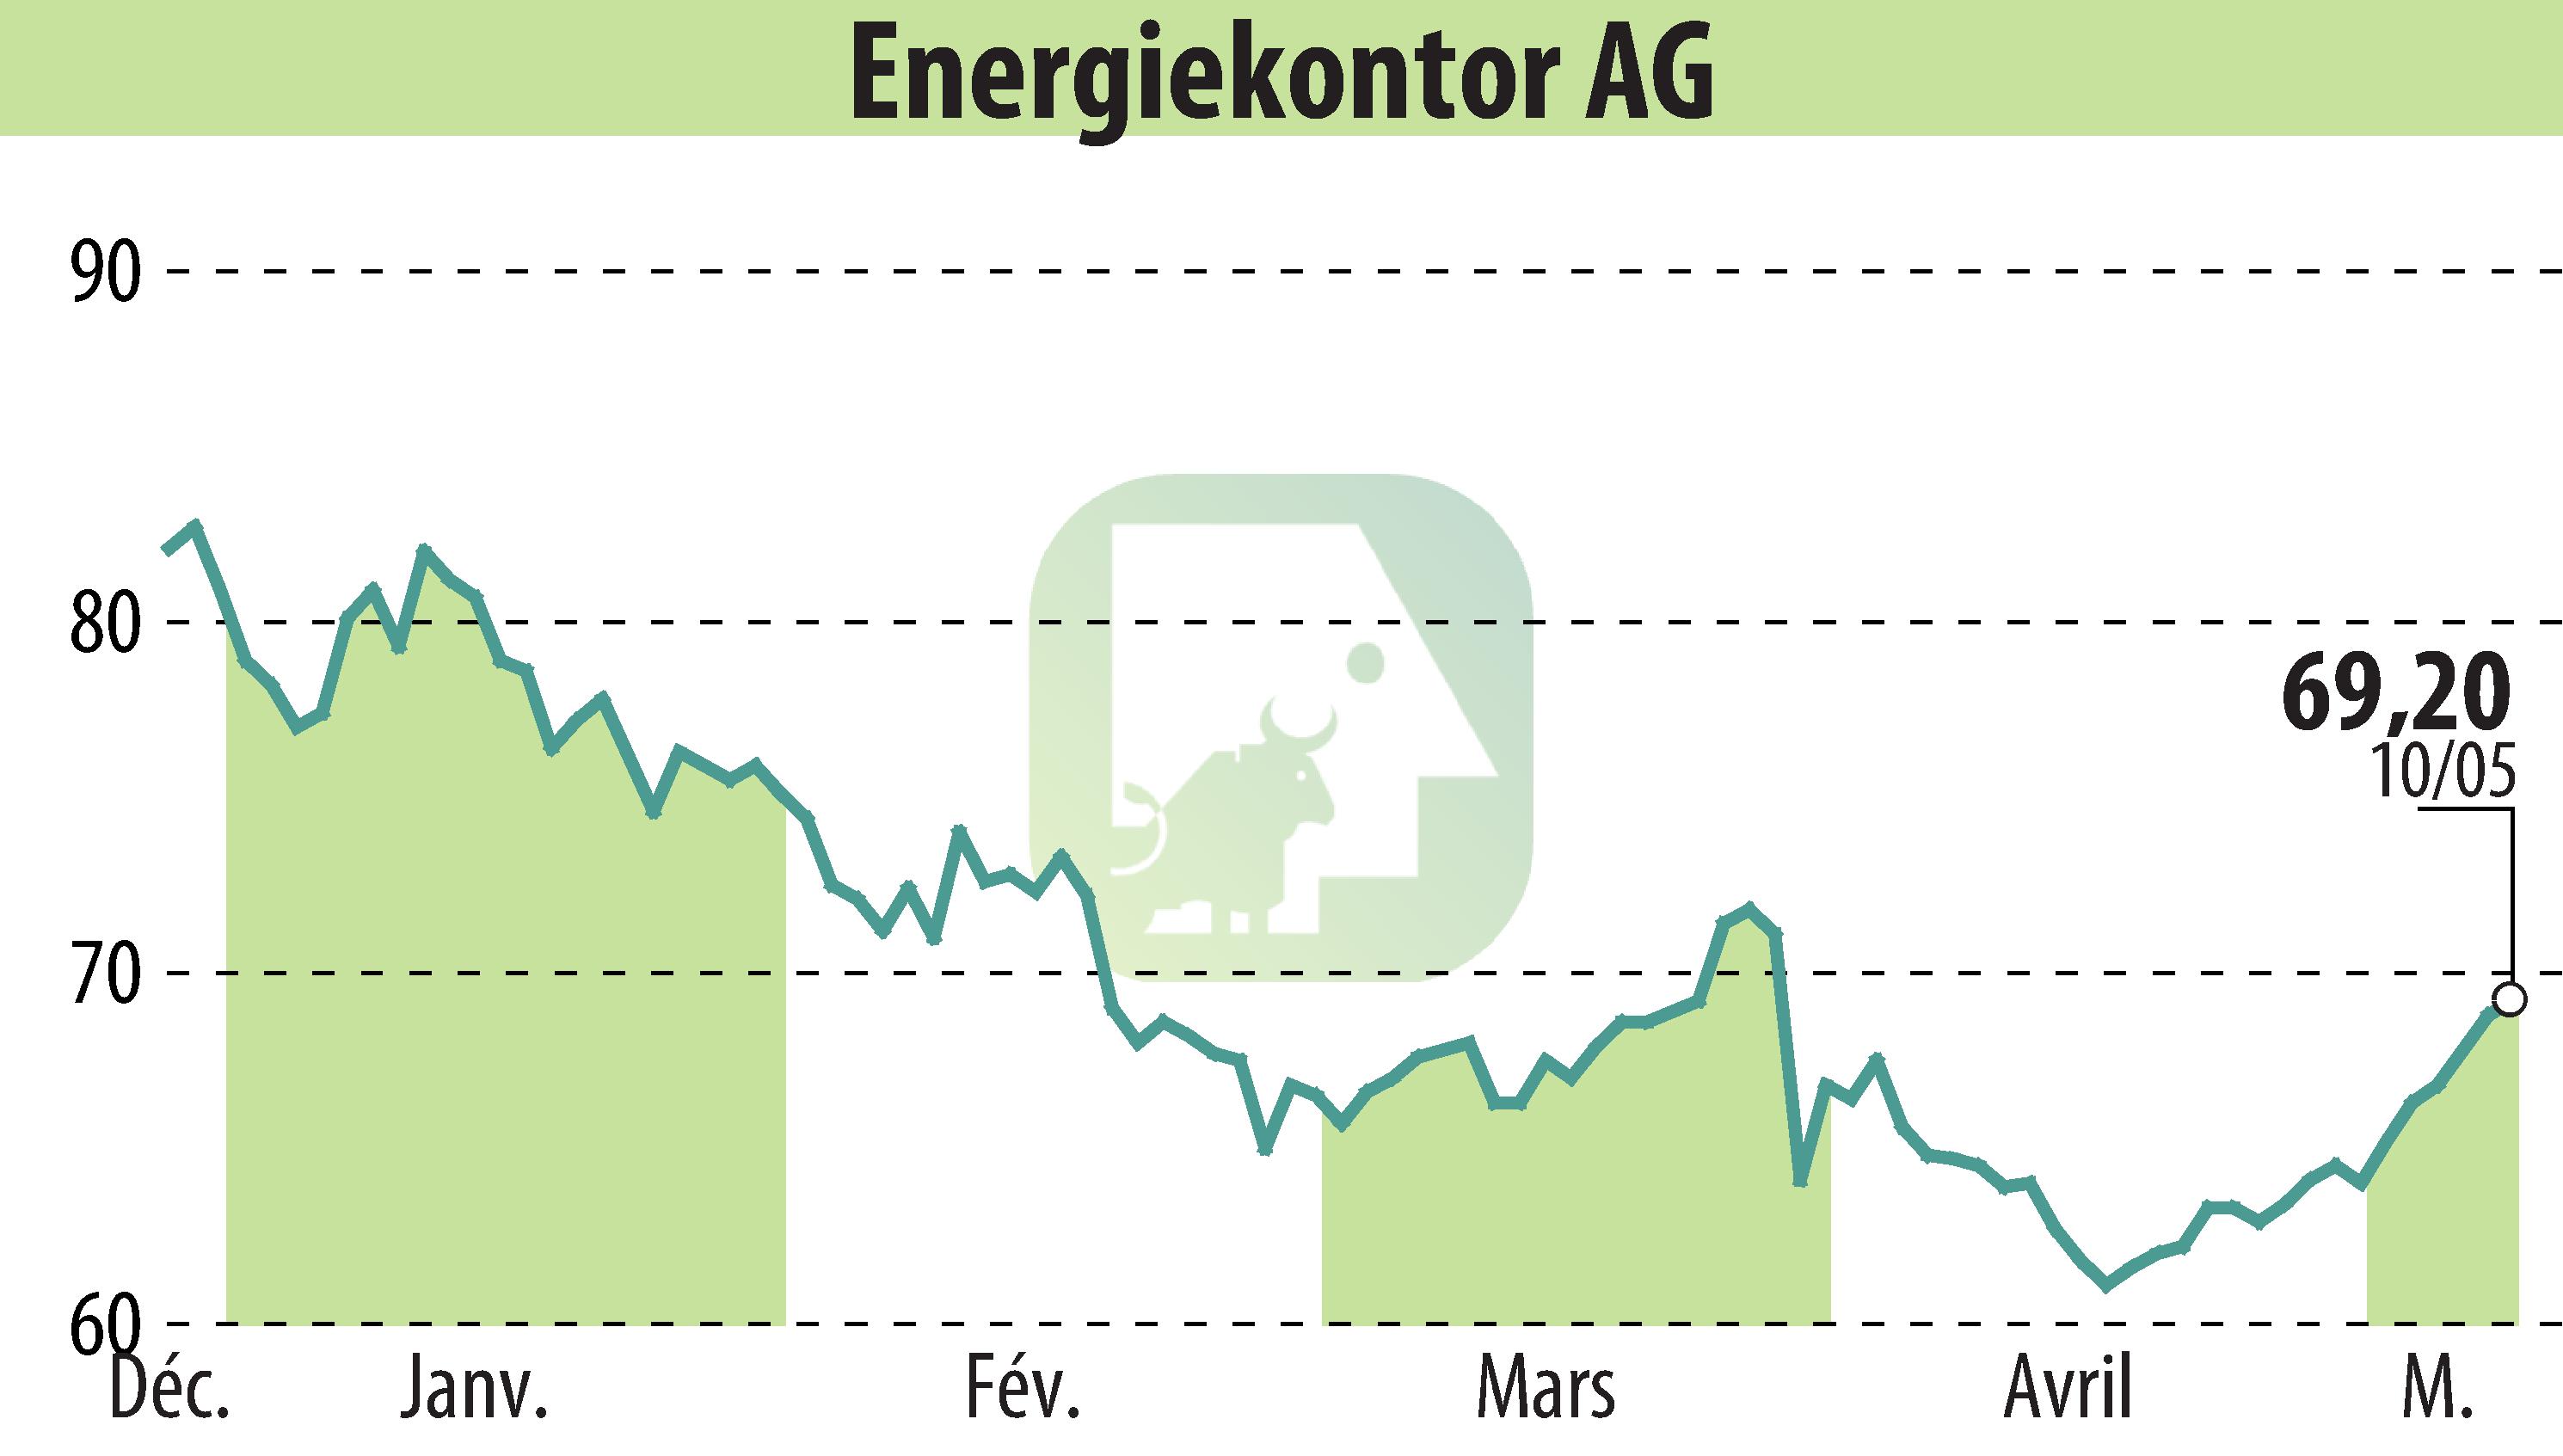 Stock price chart of Energiekontor AG (EBR:EKT) showing fluctuations.